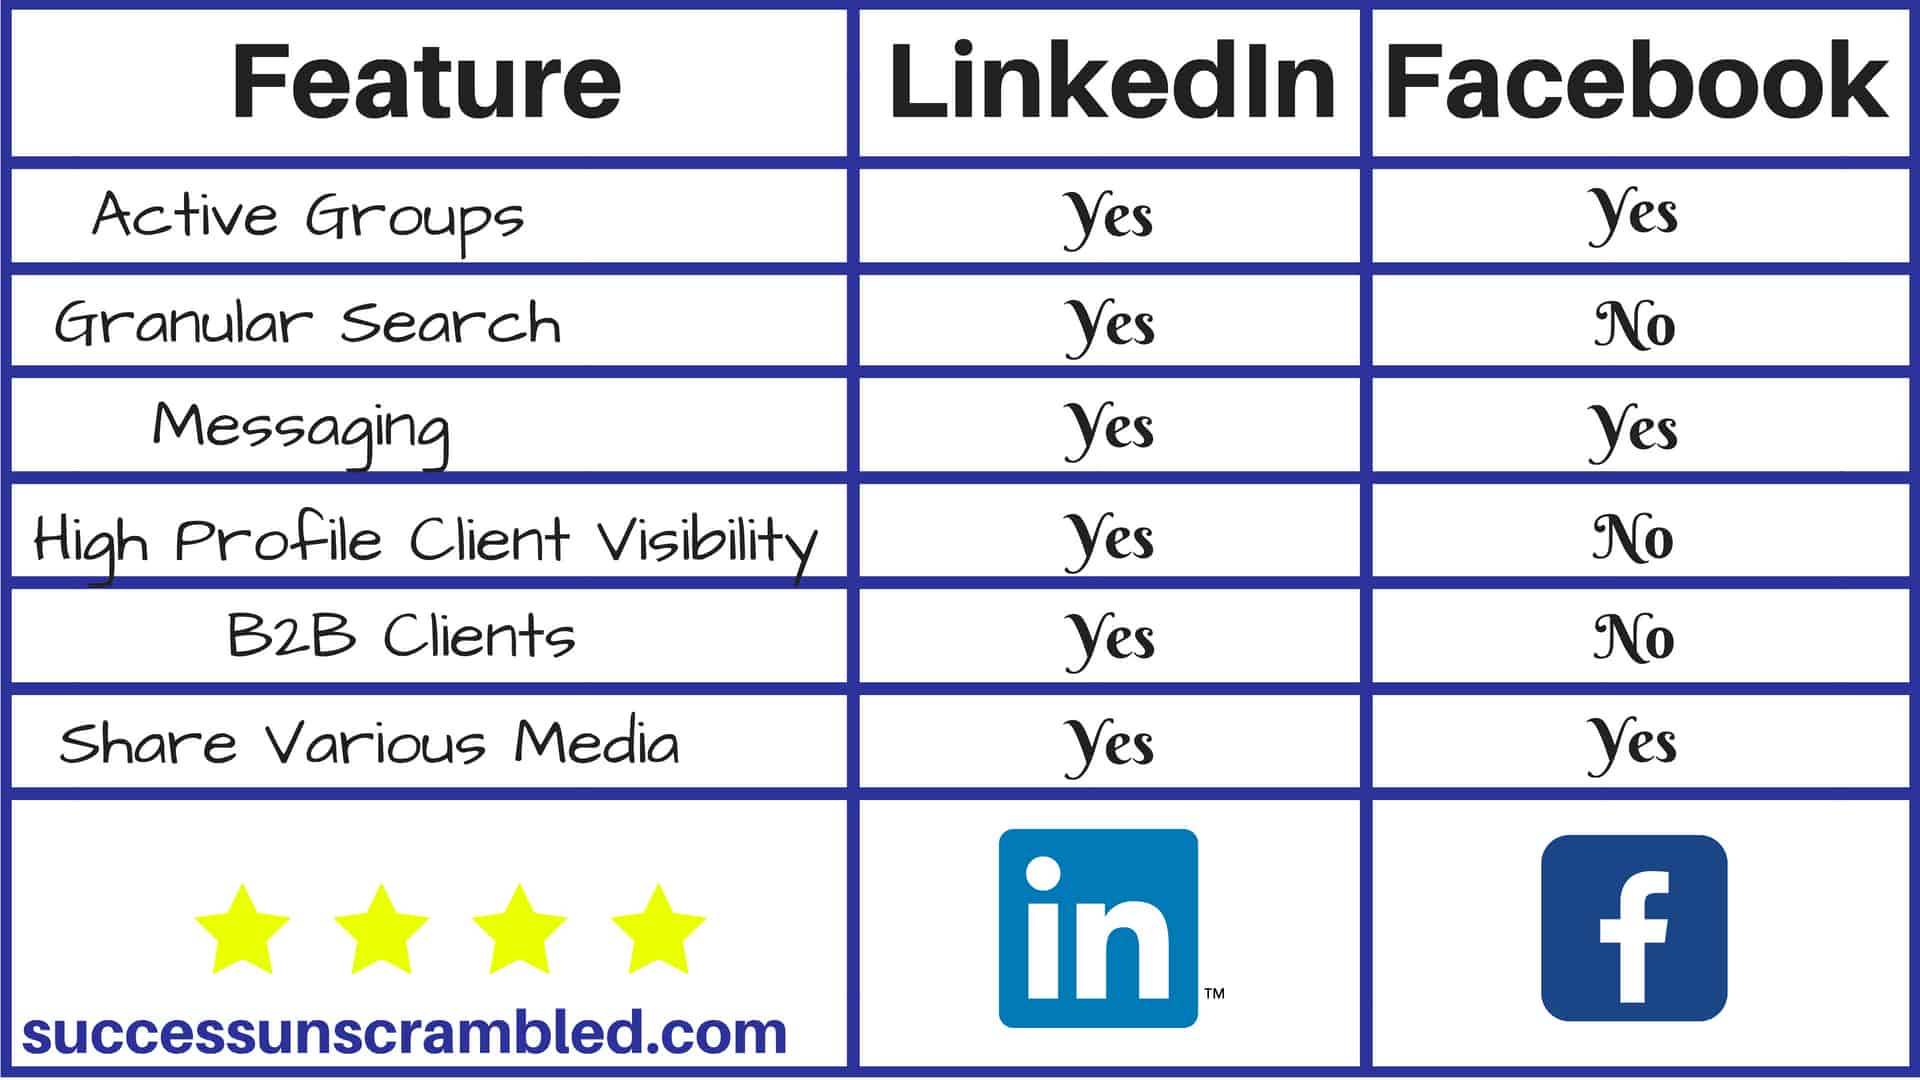 LinkedIn vs Facebook Features